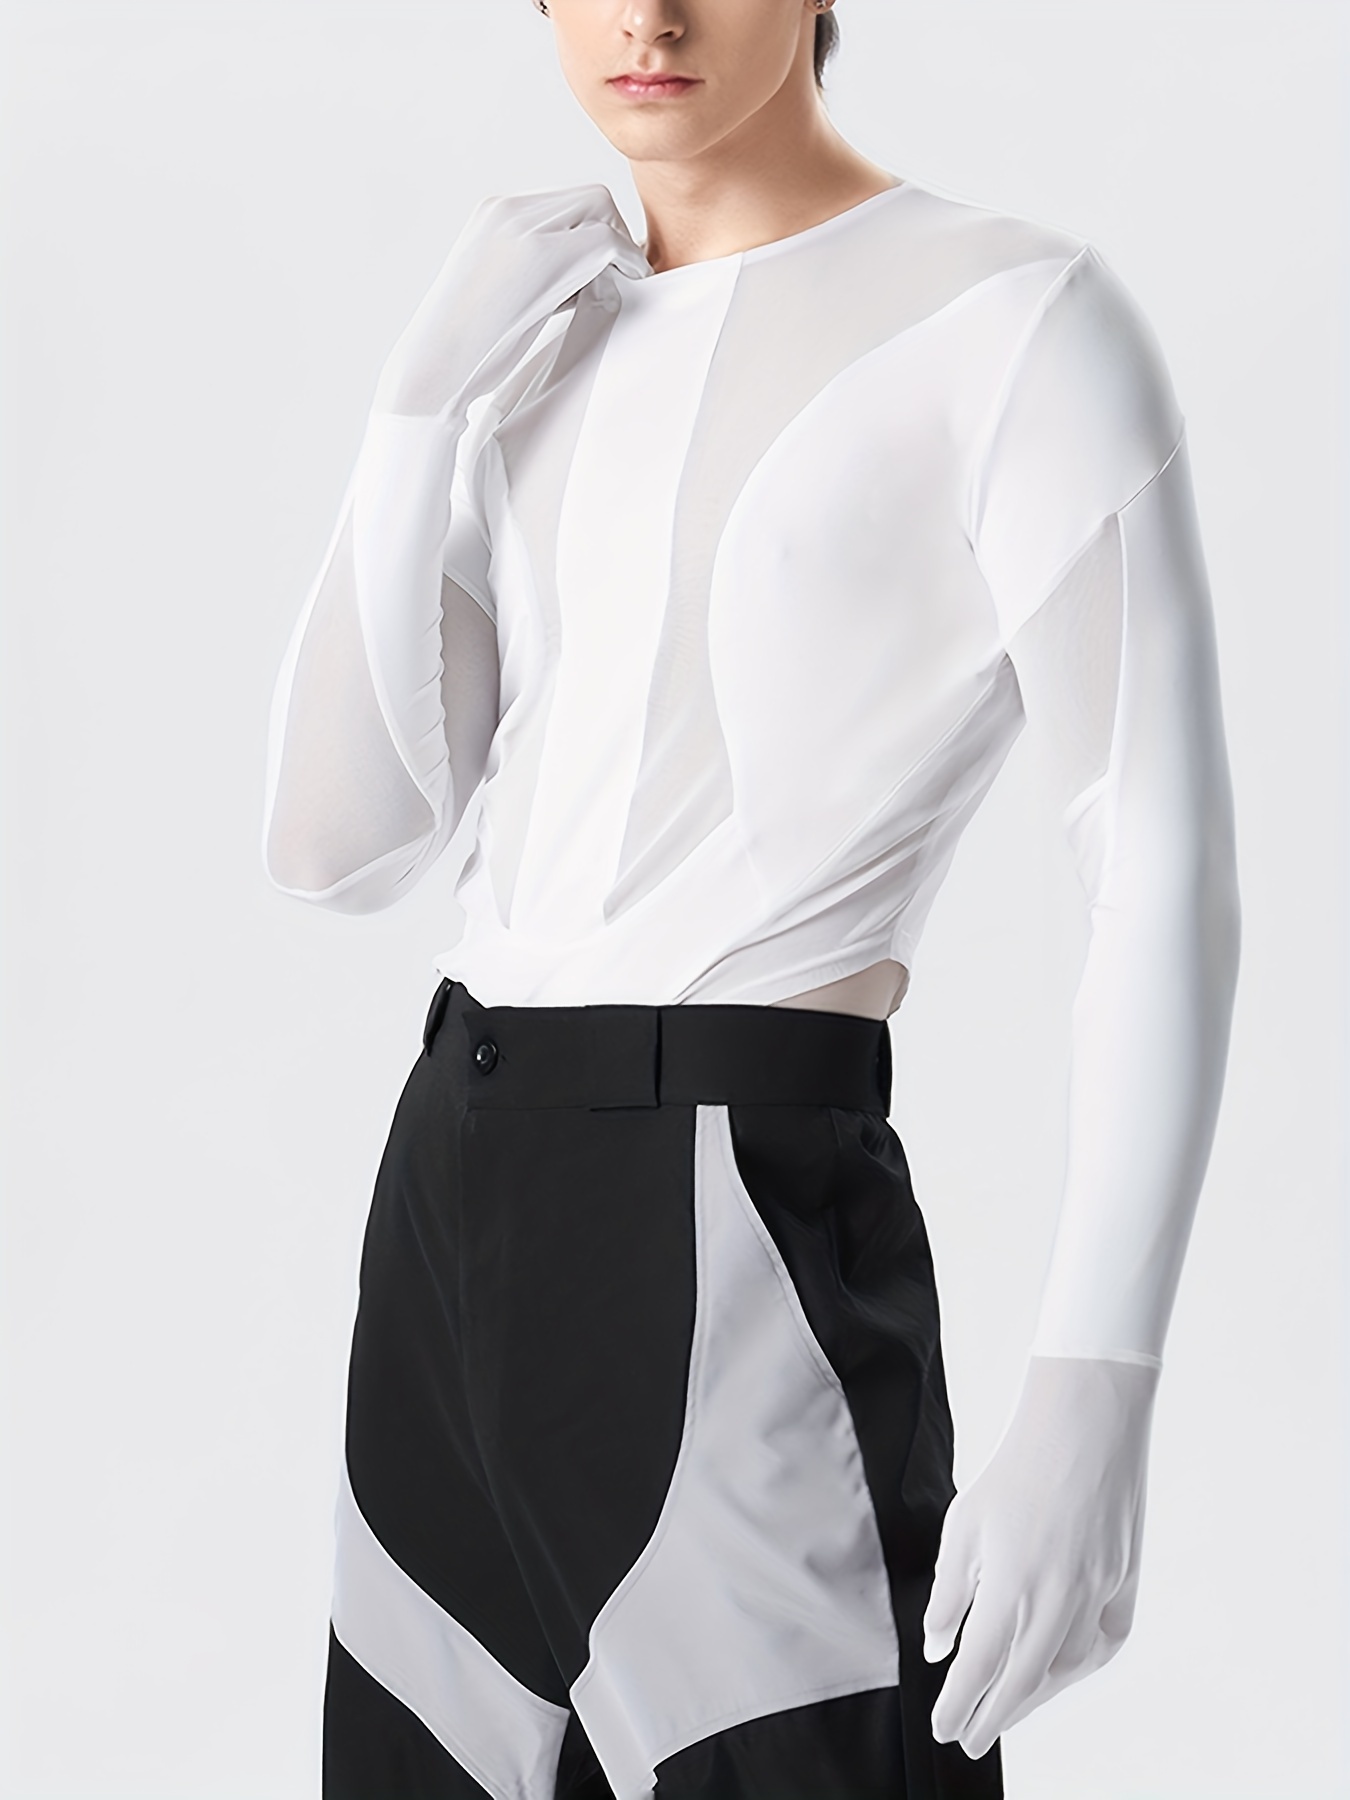 Men Long Sleeves Bodysuit Button Down Shirt Leotard Casual Romper Top  Undershirt